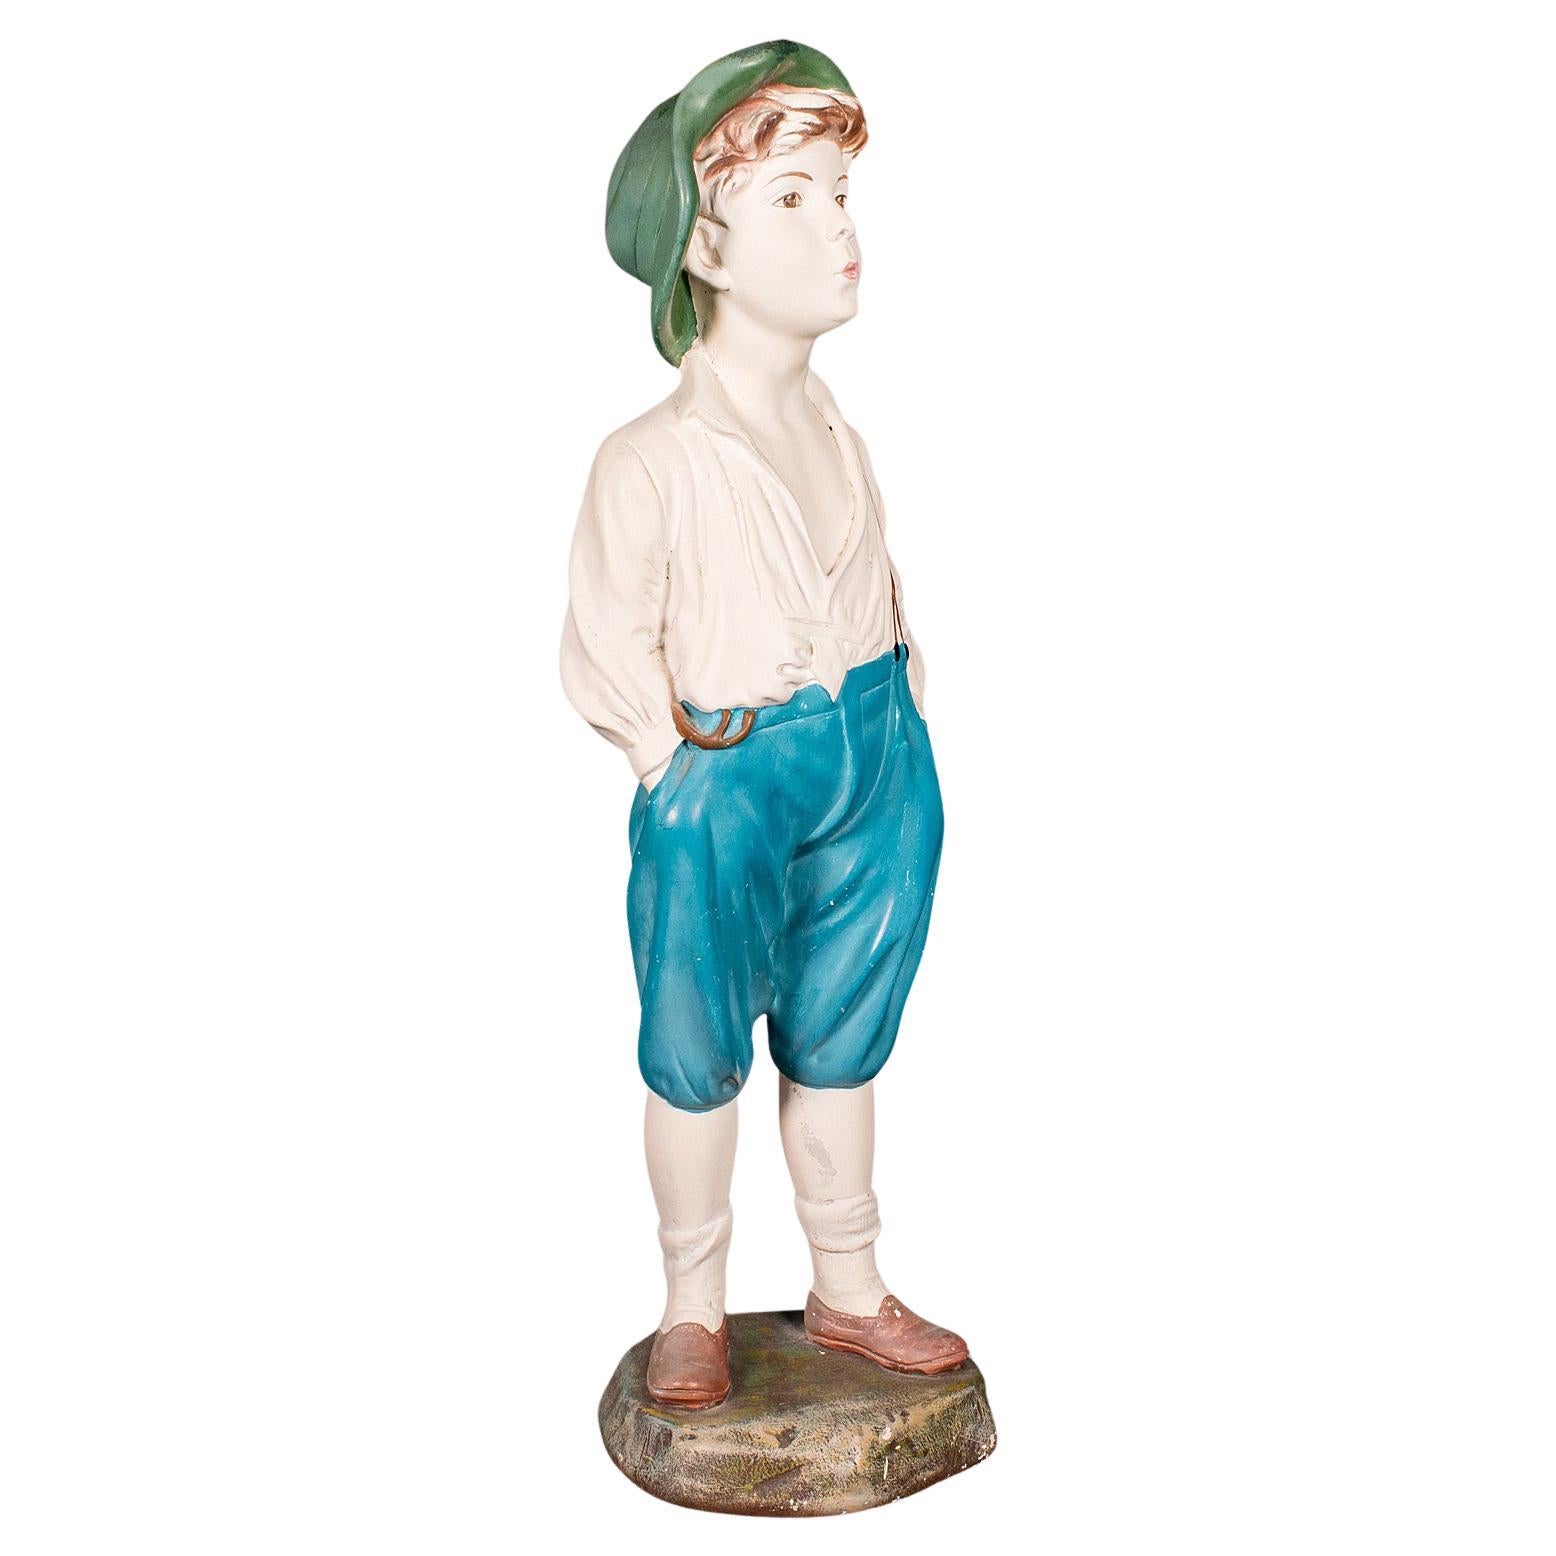 Vintage Whistling Boy Figure, English, Plaster Decor, Display Statue, Art Deco